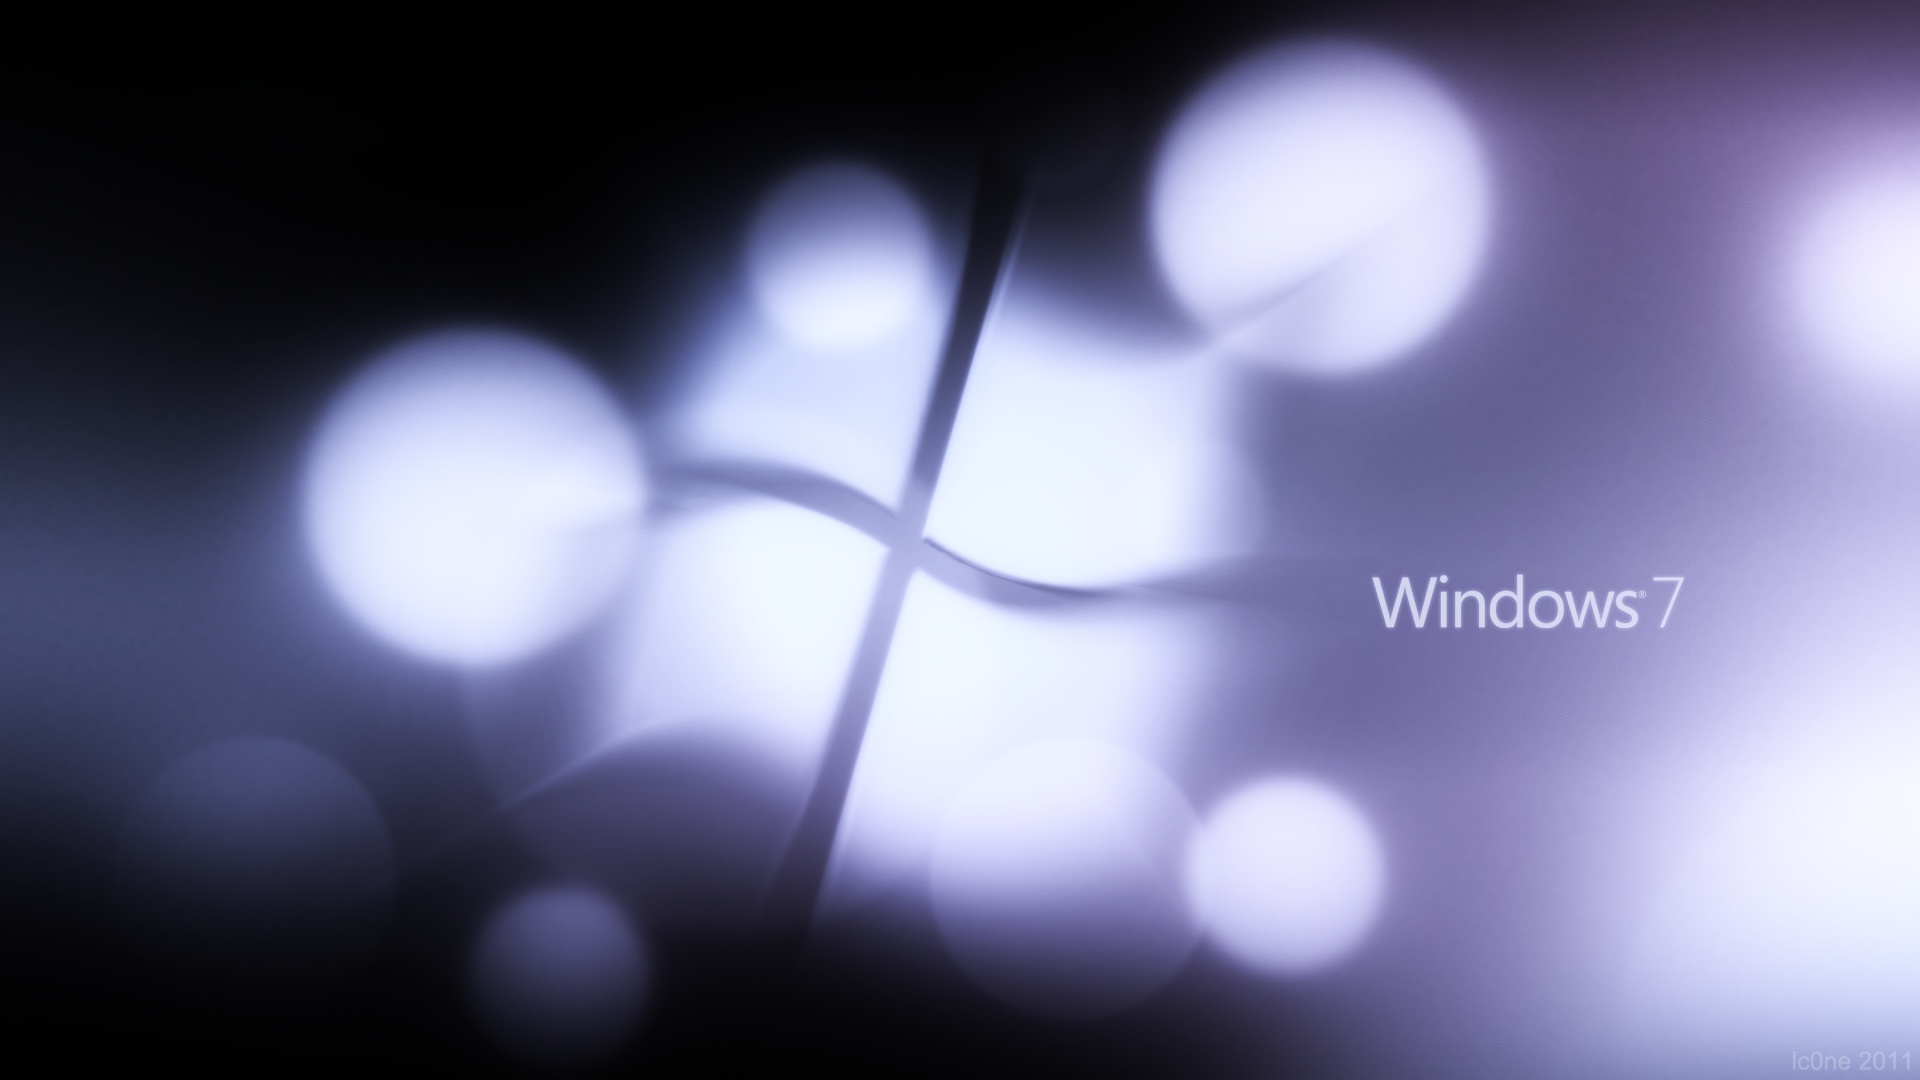 Windows 7 Logo Light Flashing Purple Wallpaper Brands And Logos Wallpaper Better